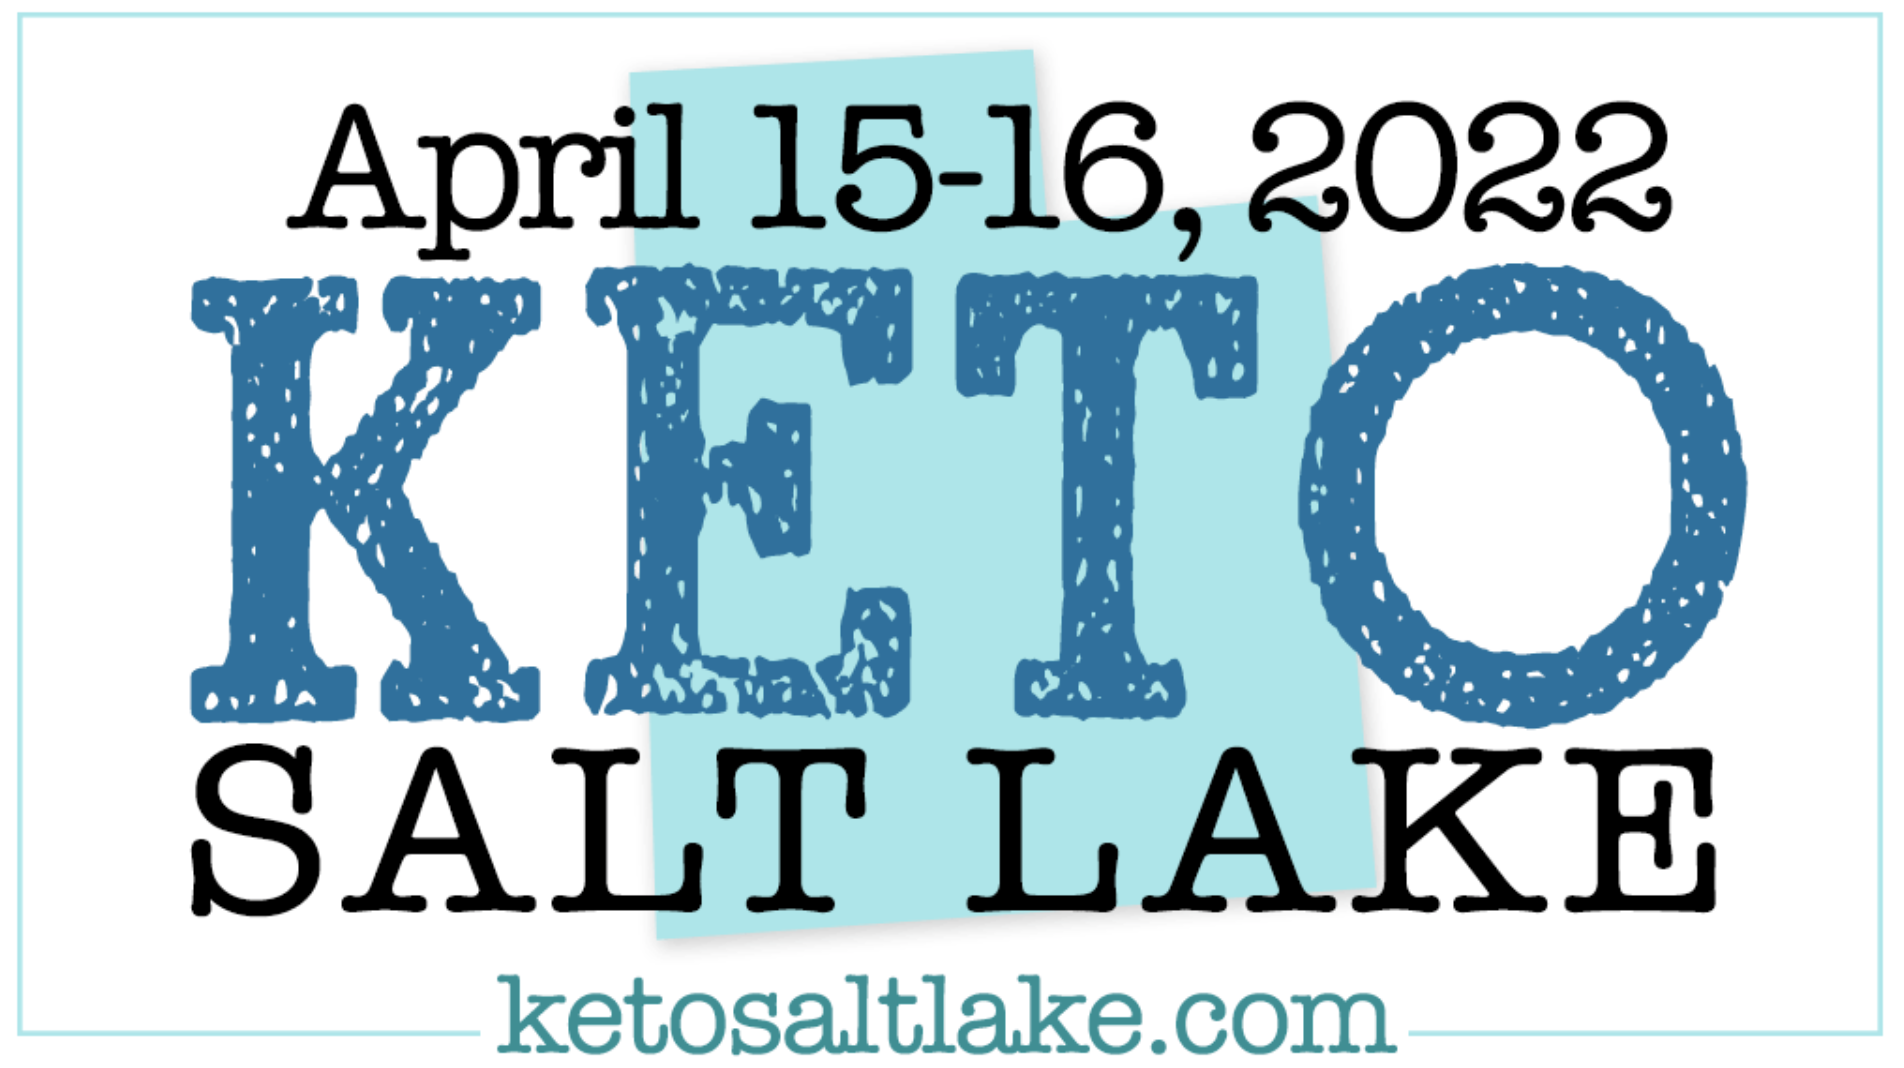 Keto Salt Lake Event